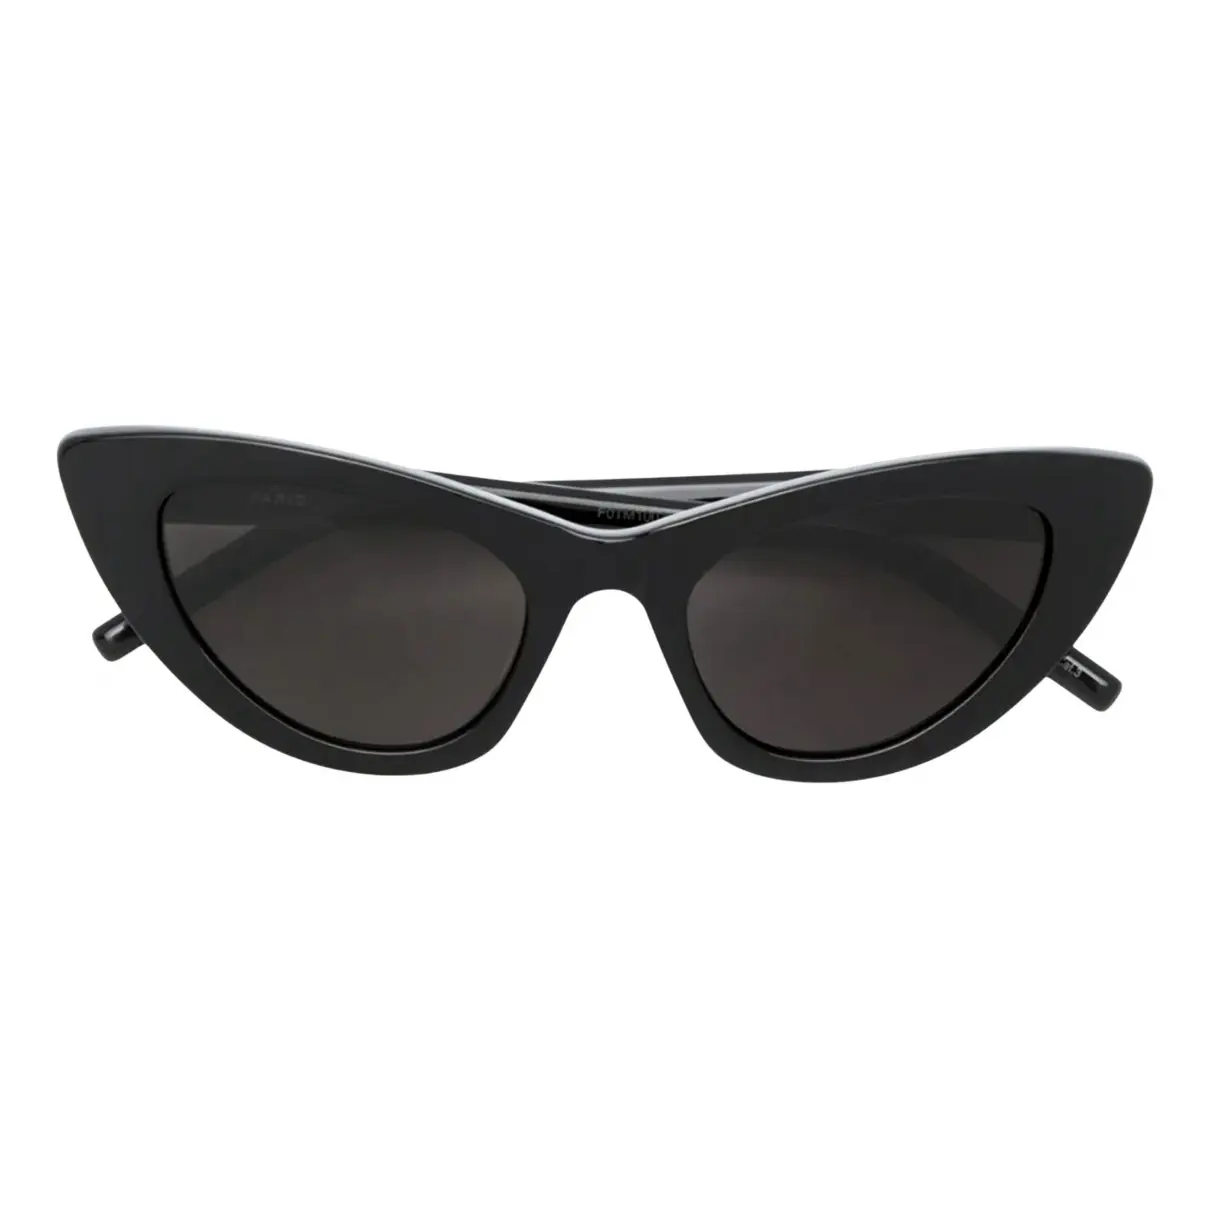 Lily oversized sunglasses Saint Laurent